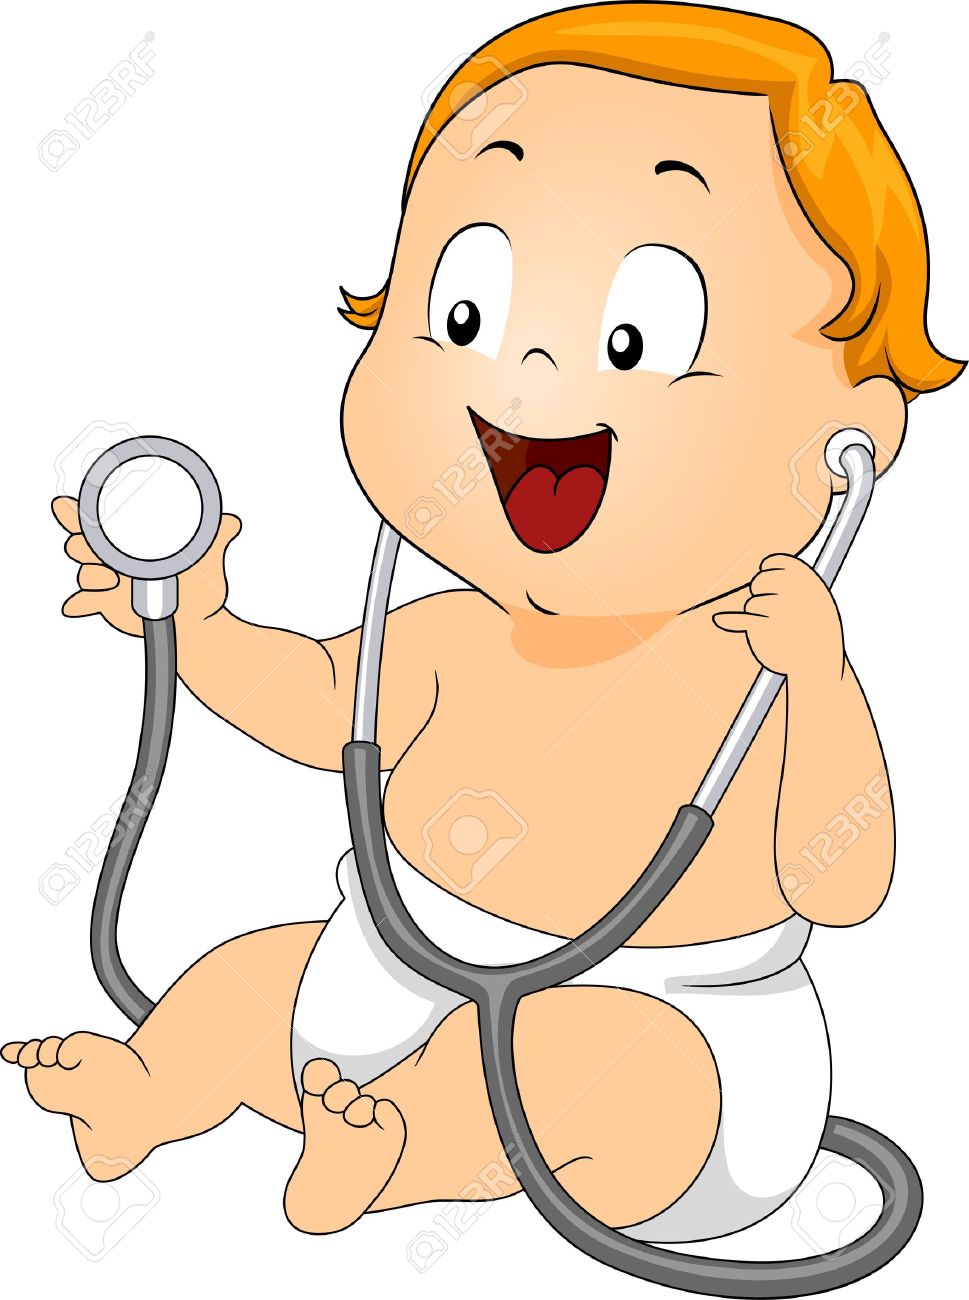 Pediatric free download best. Pediatrician clipart nurse